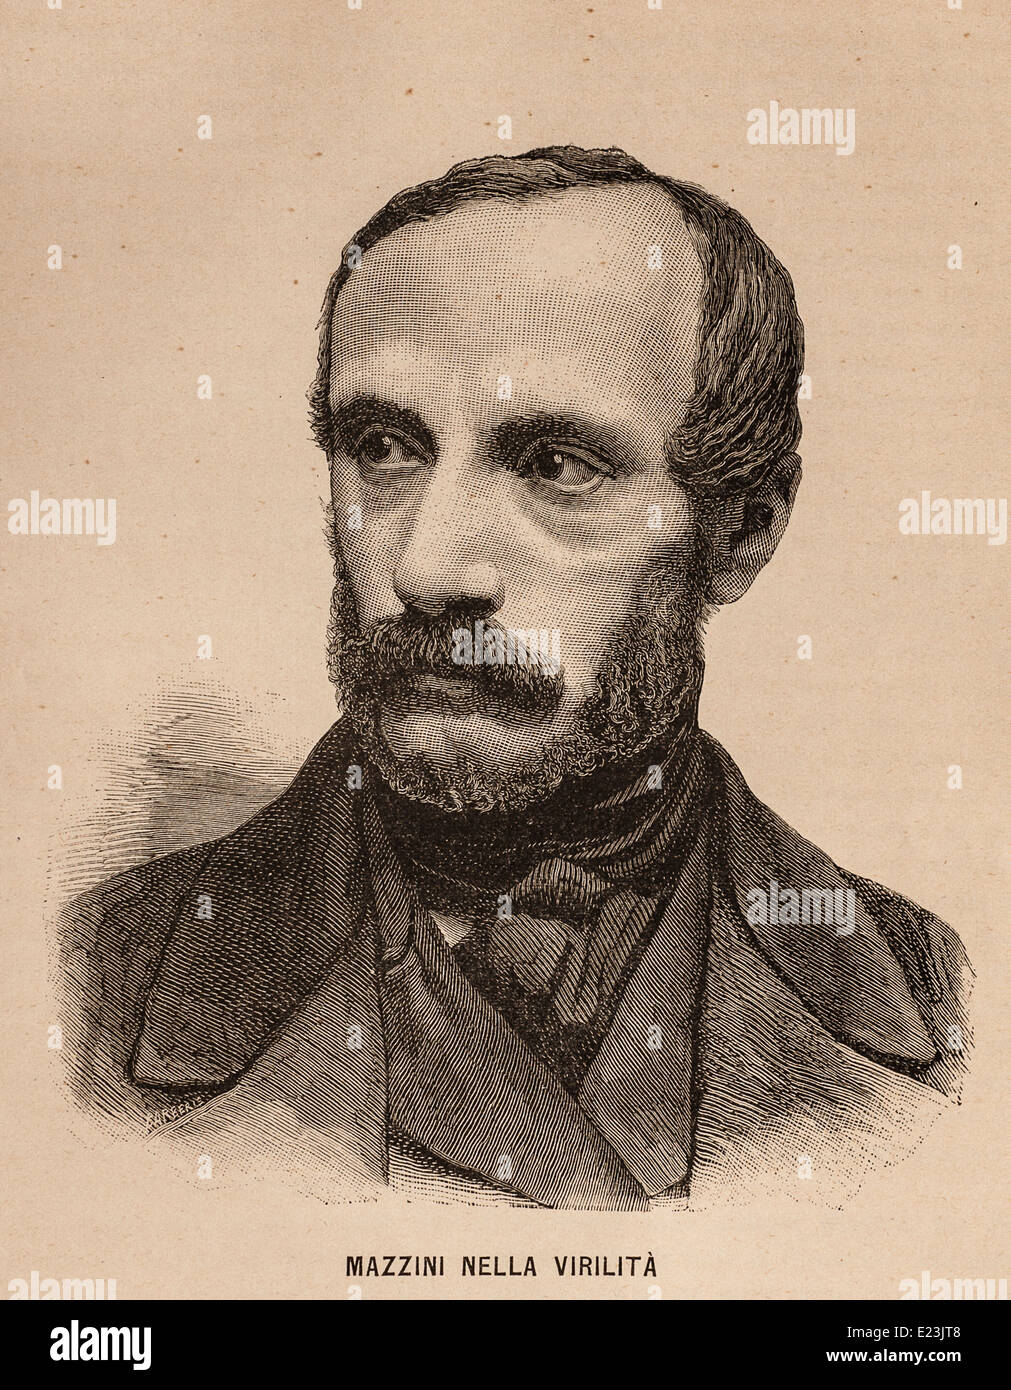 Giuseppe Mazzini aus dem Buch der Jessie W. Mario des Lebens von Mazzini. Porträt von Giuseppe Mazzini Stockfoto